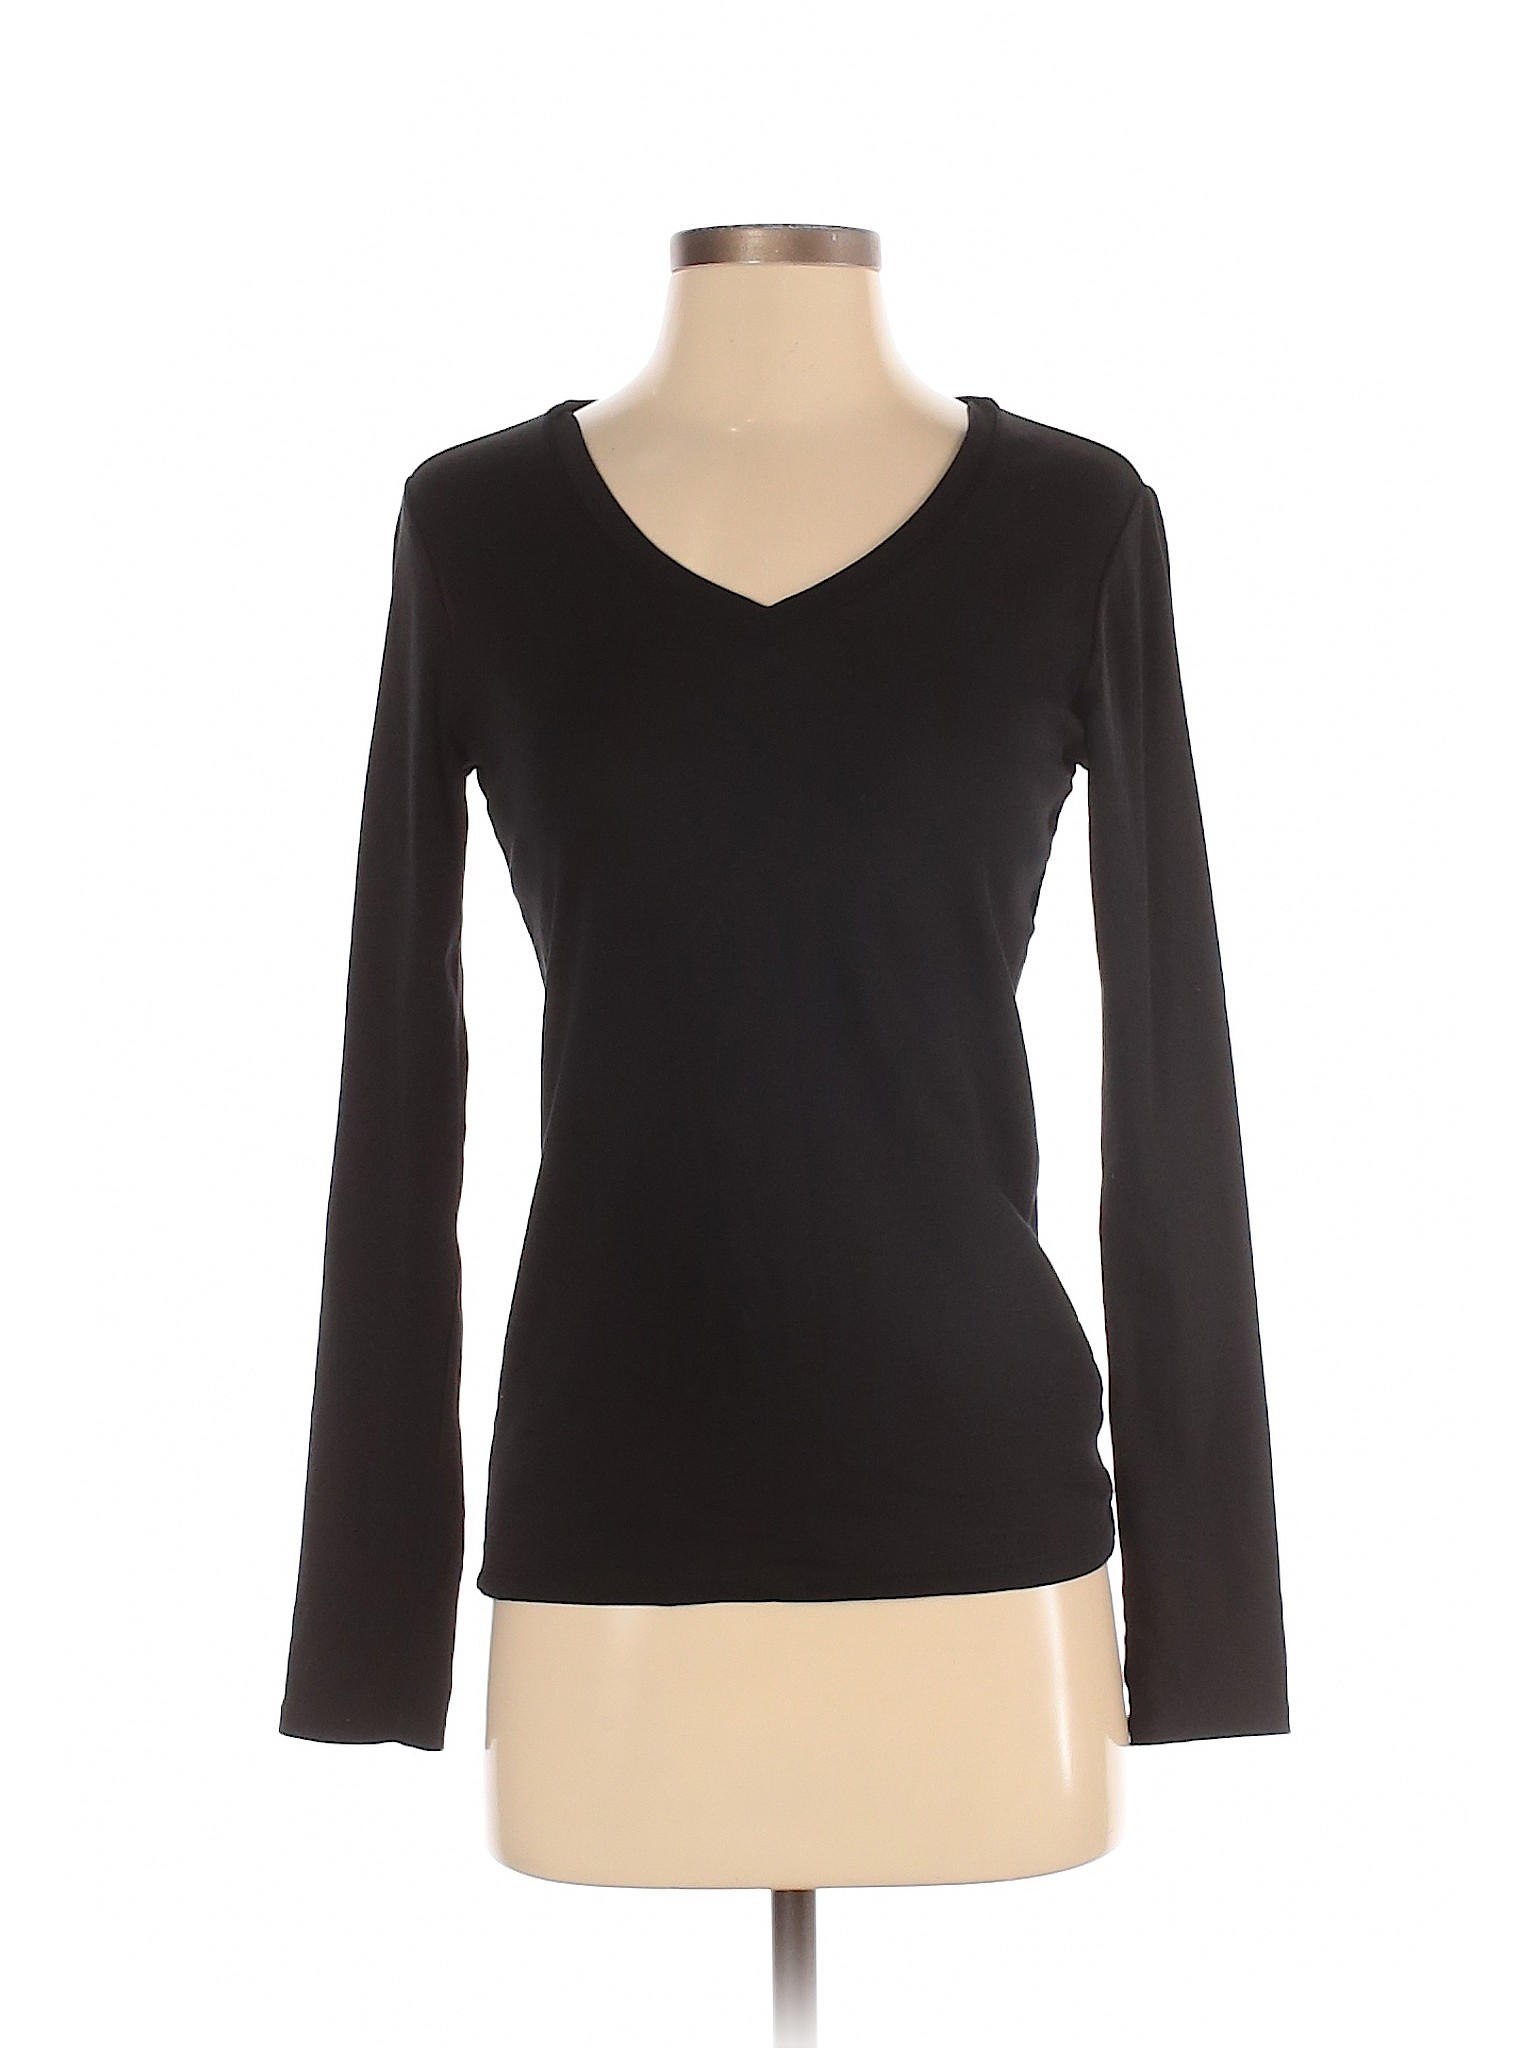 Uniqlo Women Black Long Sleeve T-Shirt S | eBay